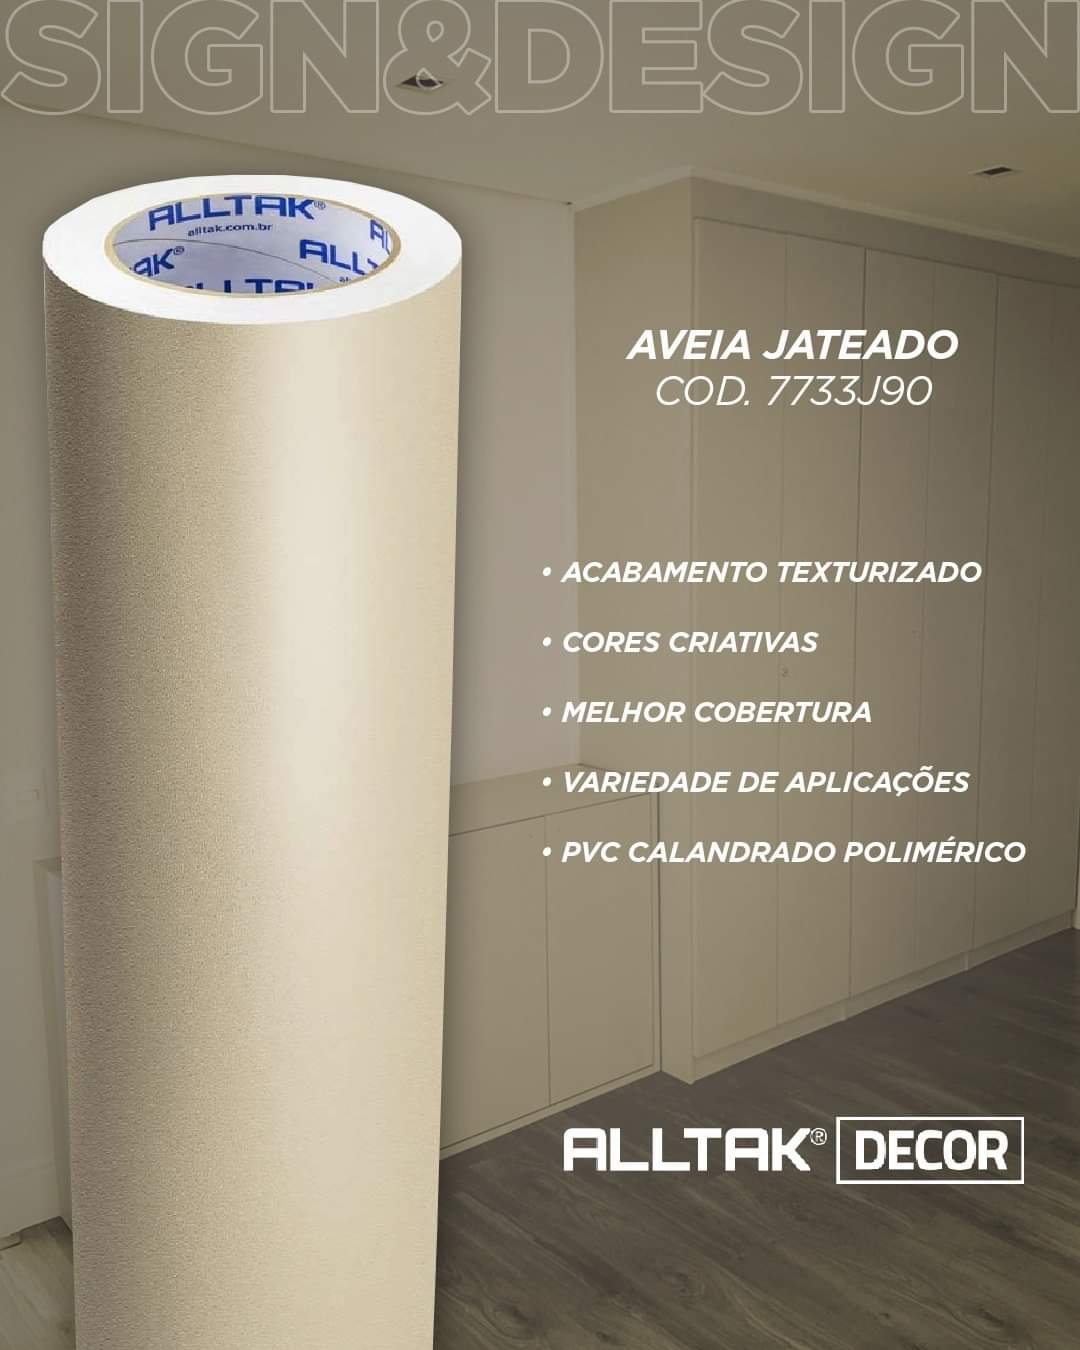 Adesivo Decorativo Premium Jateado Aveia 1m de comprimento por 1.22 cm Largura. - 3